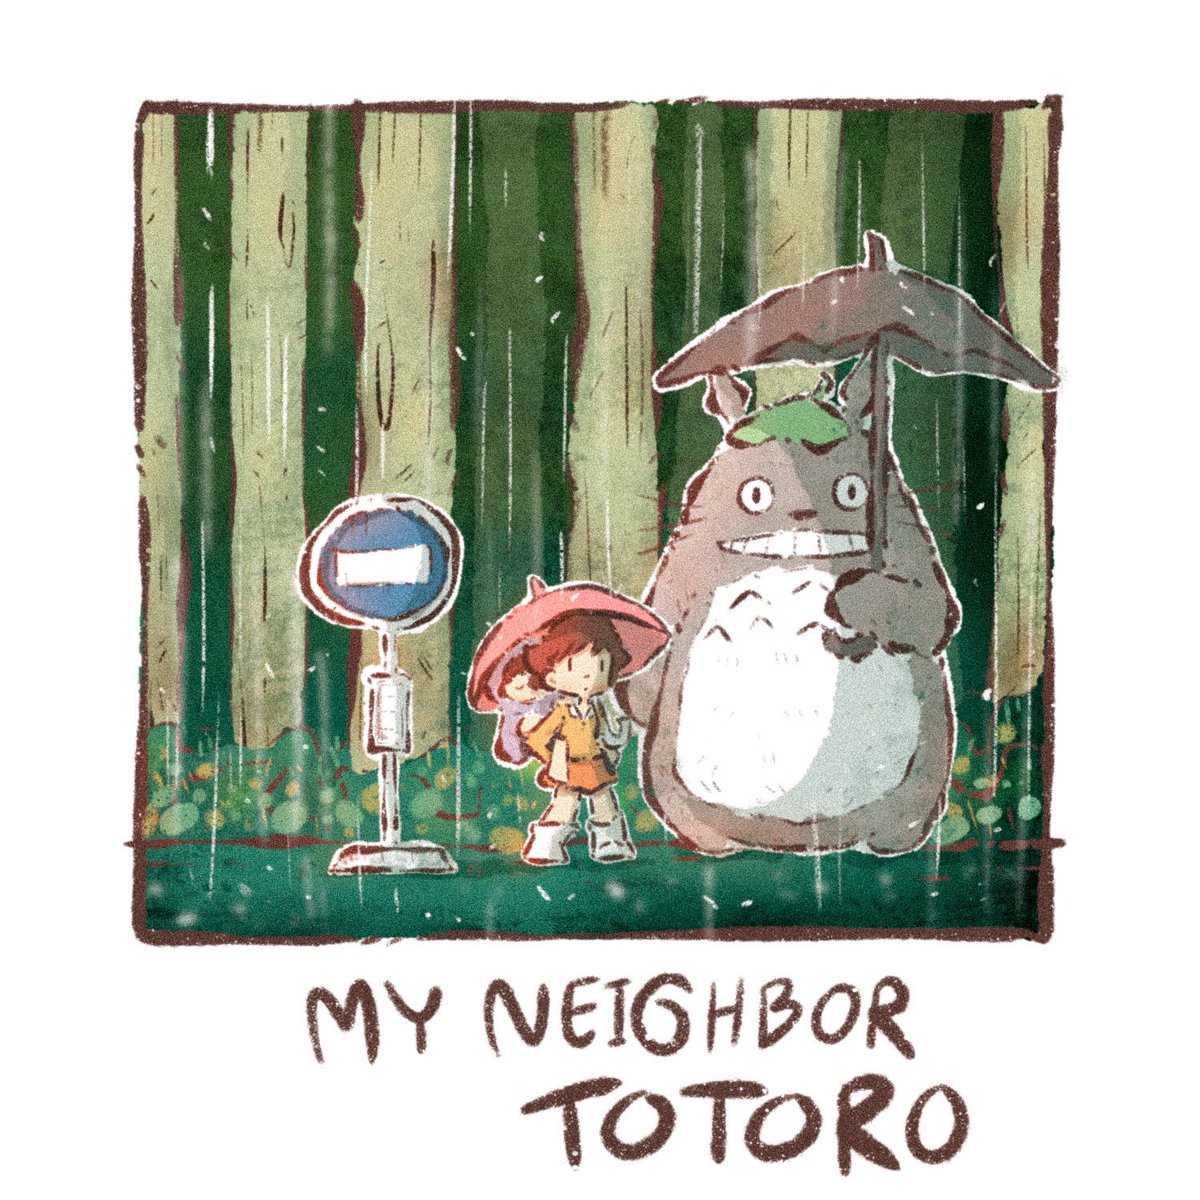 Totoro #studioghibli #myneighbortotoro #totoro